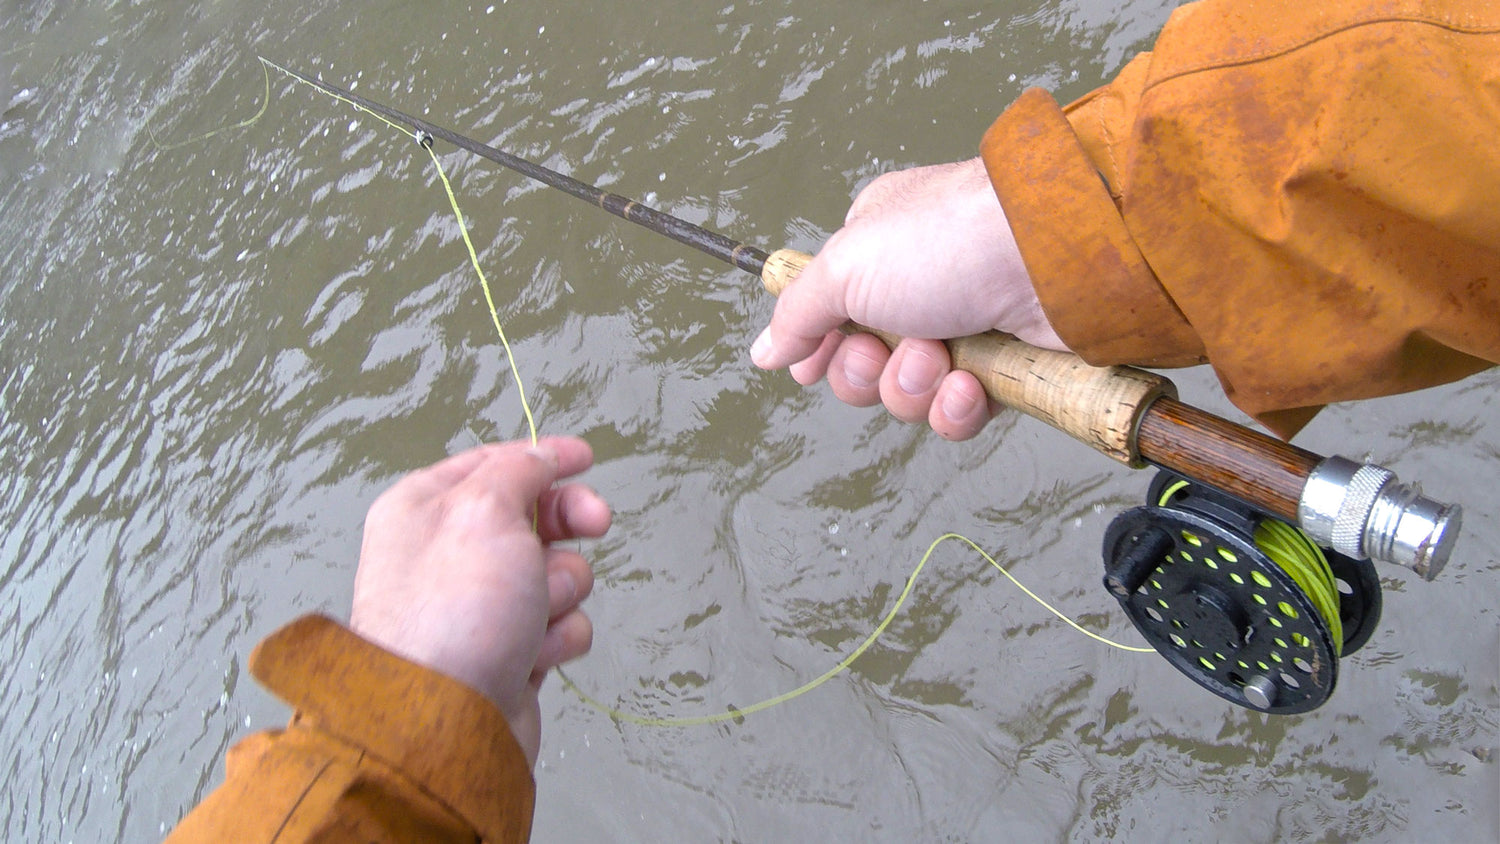 Fishing line too loose how do I tighten it? : r/FishingForBeginners